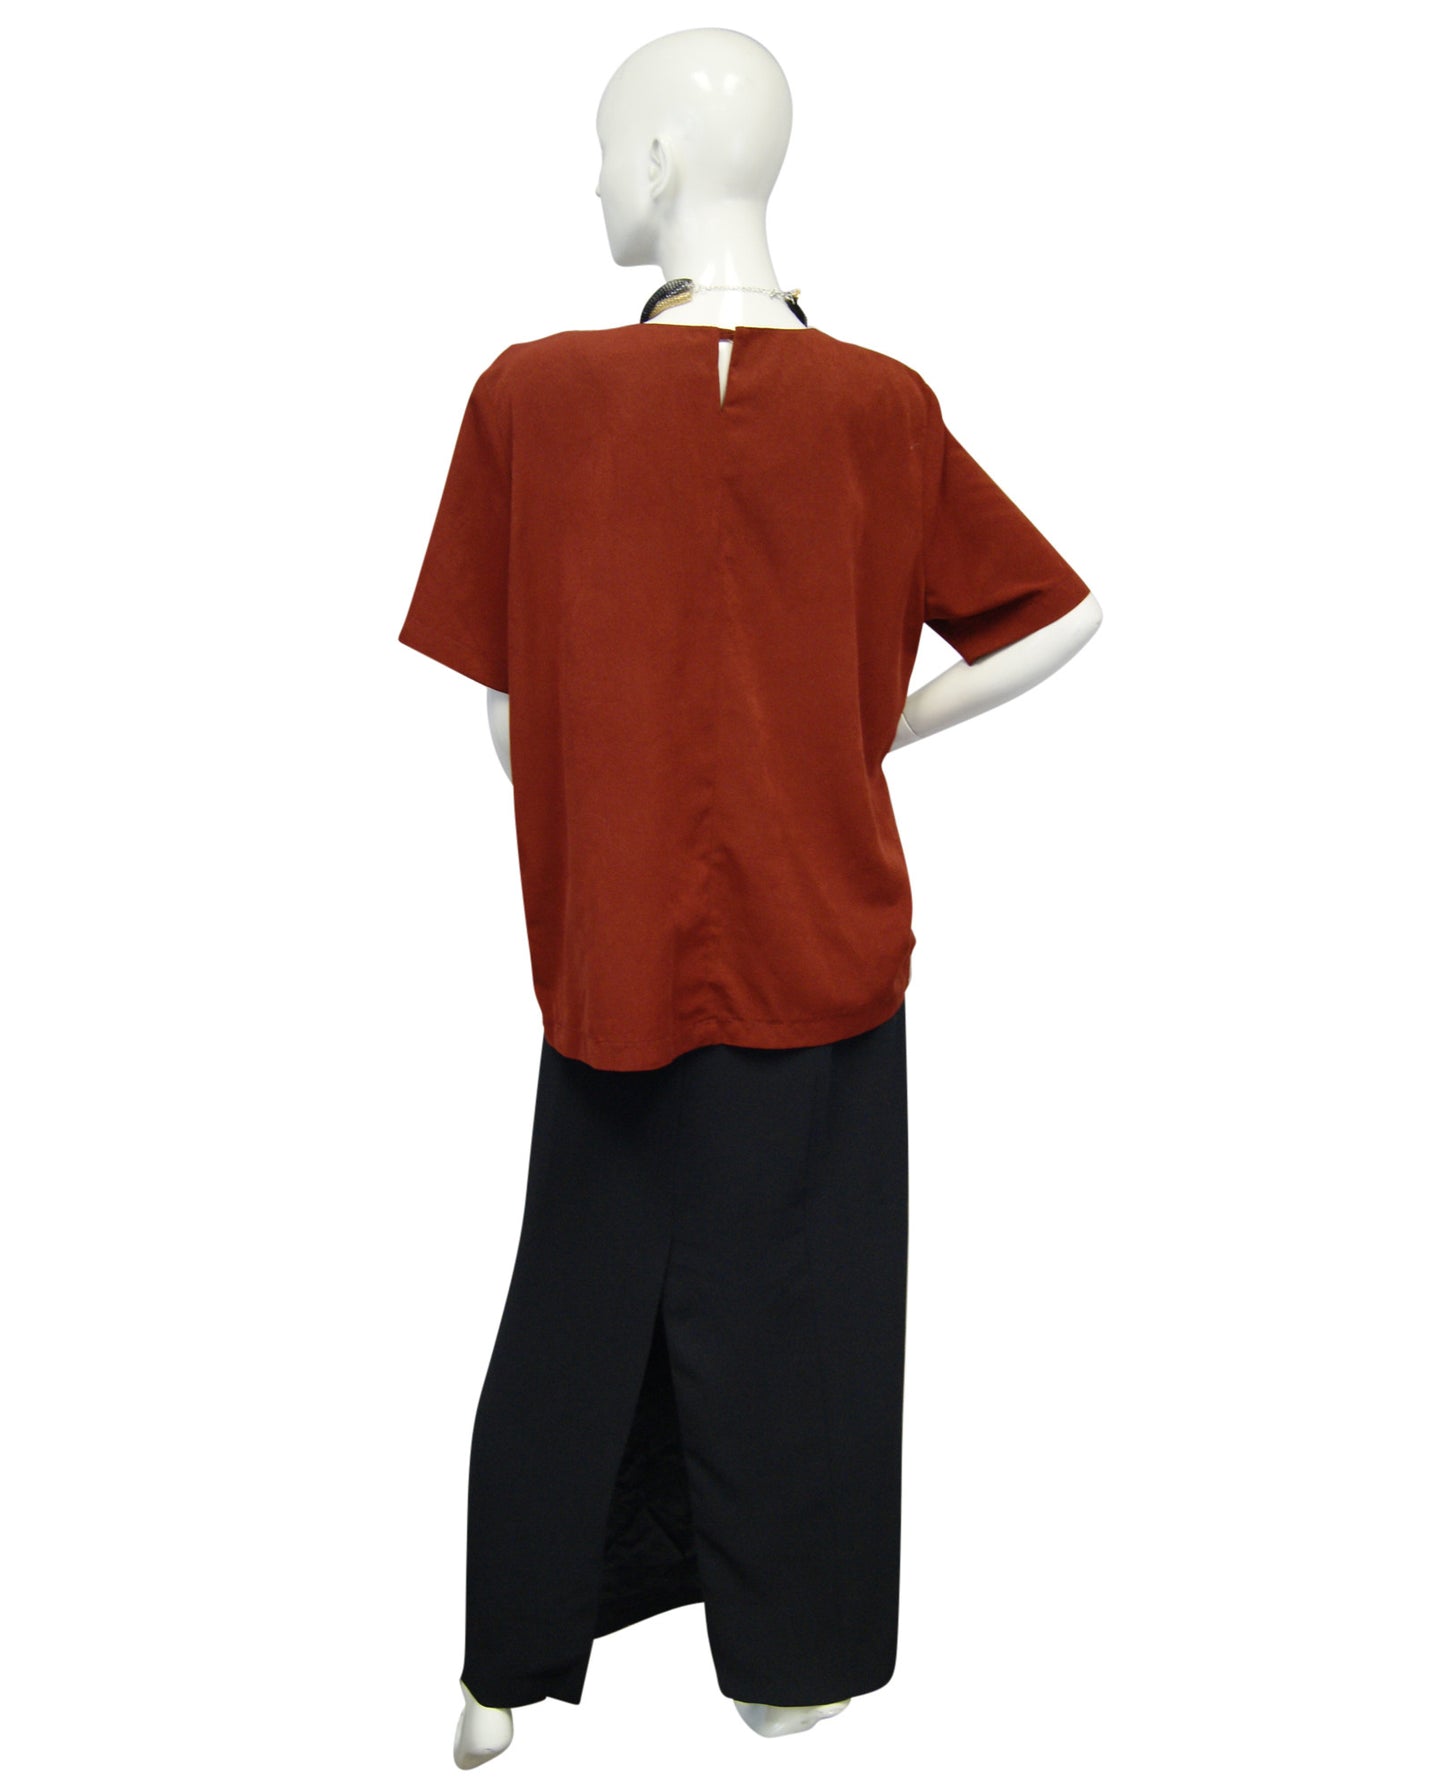 Saint Germain Rust Shirt Size Large ( (SKU  000051) - Designers On A Dime - 3